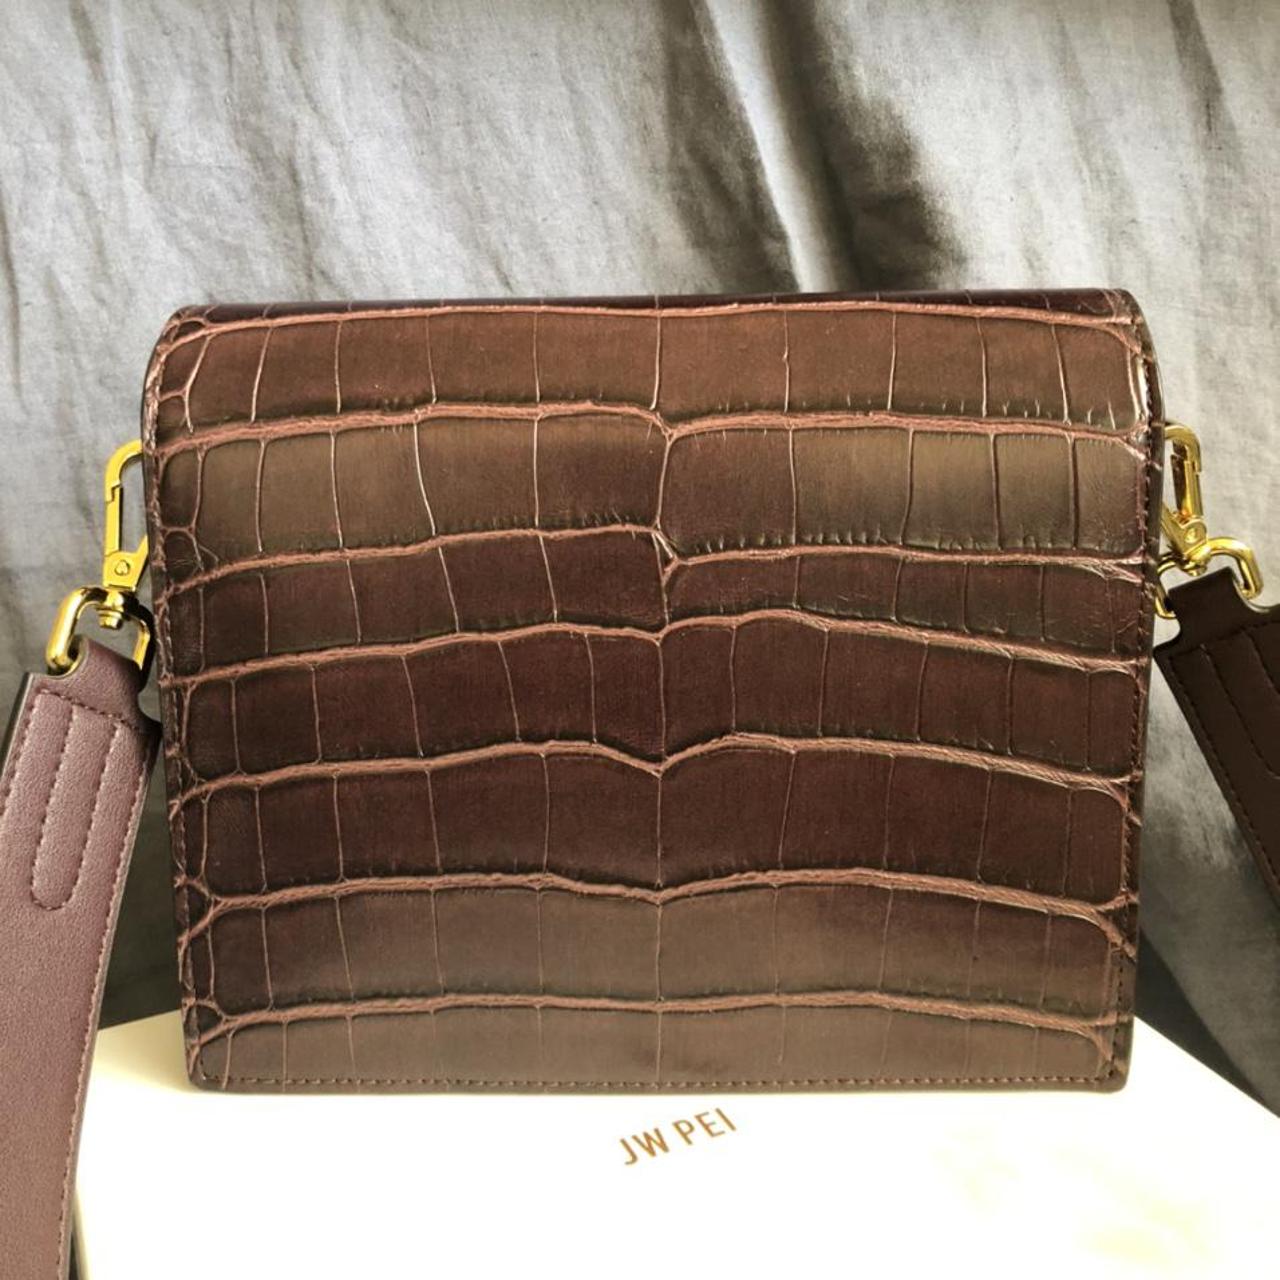 JW PEI Mini Flap Crossbody Bag Brown Croc Vegan Leather Purse